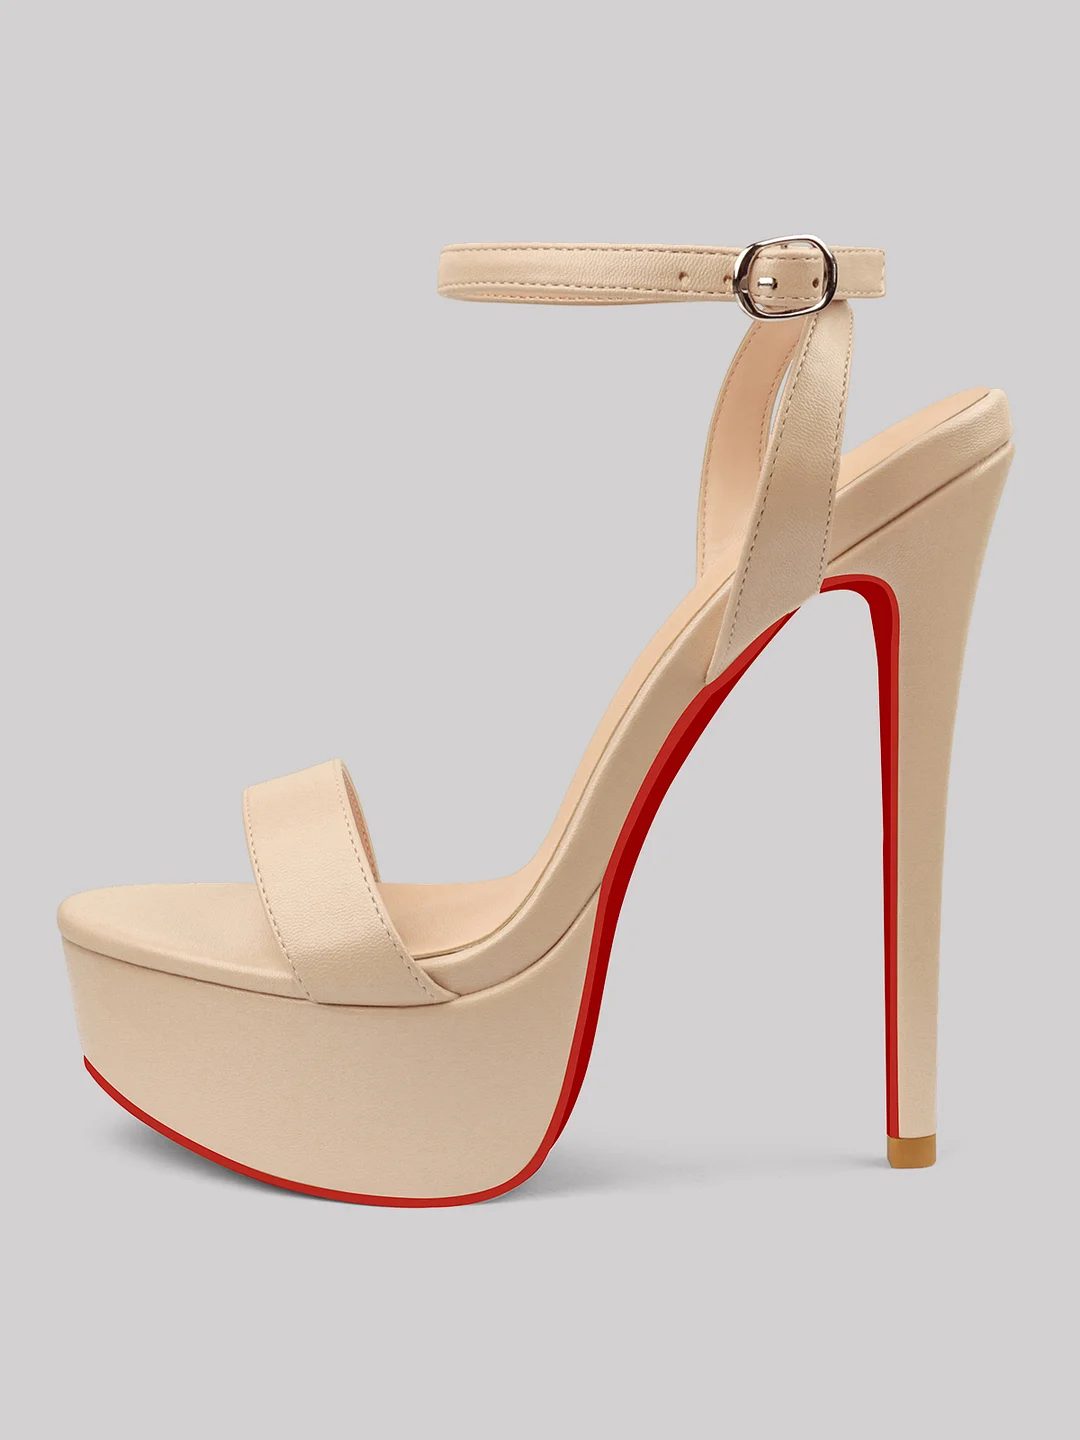 150mm Women's Open Toe Platform Ankle Strap High Heel Matte Sandals Red Bottom Shoes